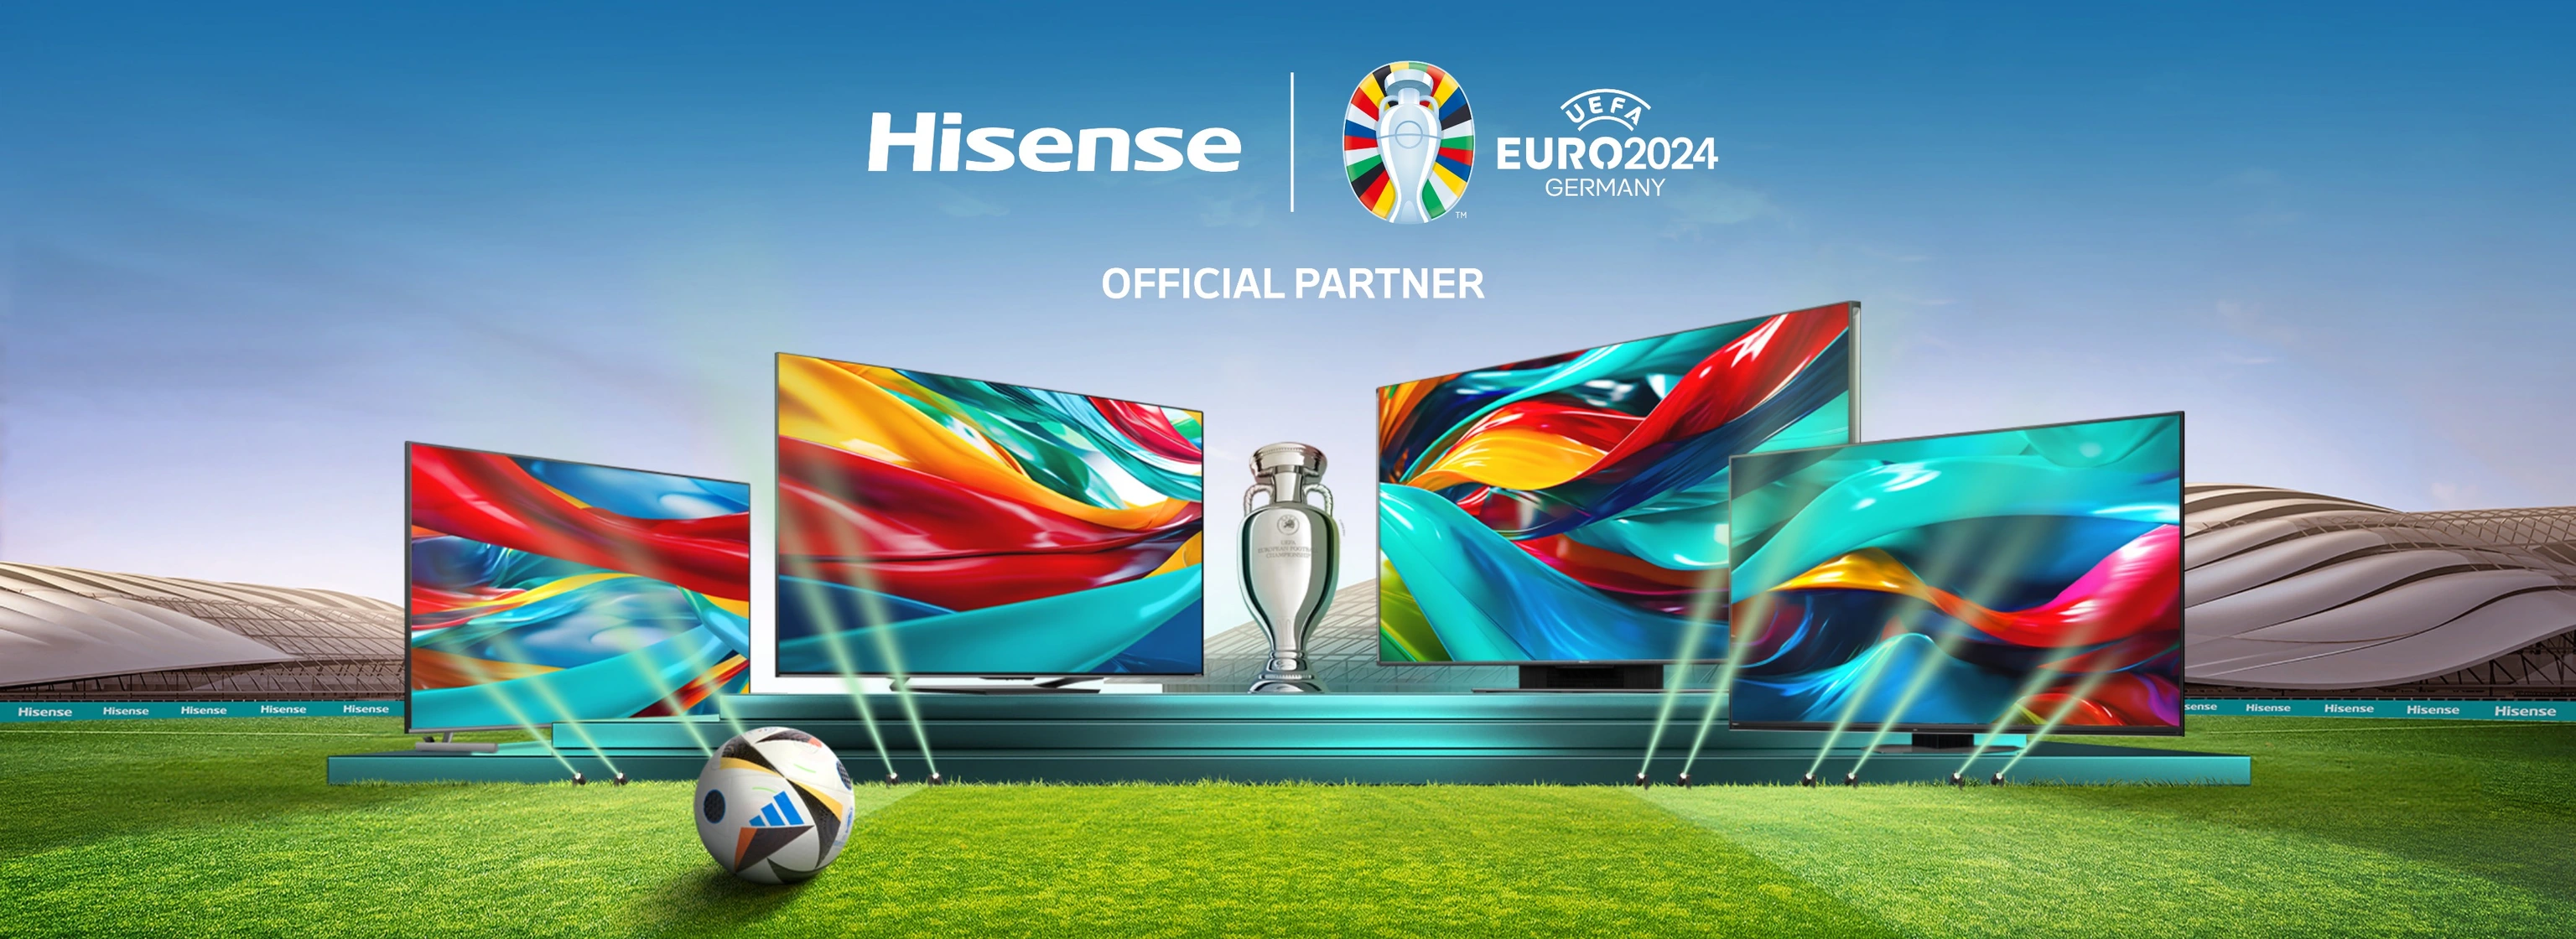 Hisense Nederland Official Partner EURO2024.webp